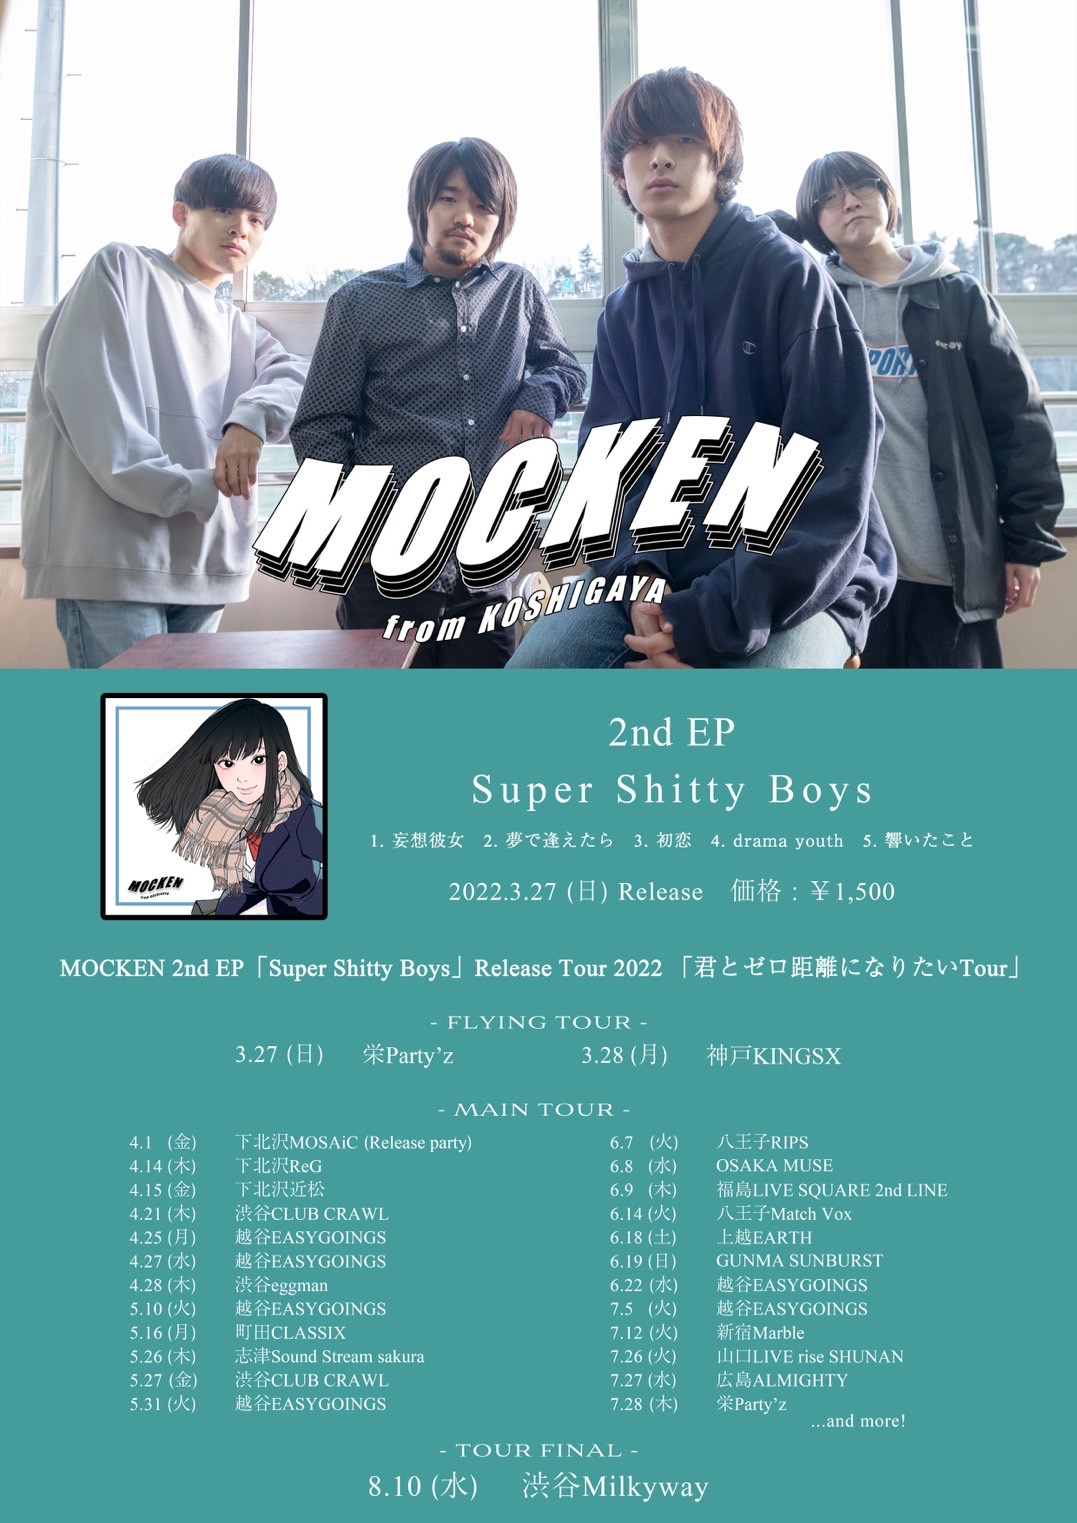 MOCKEN 2nd EP "Super Shitty Boys" release tour 「君とゼロ距離になりたいTour」